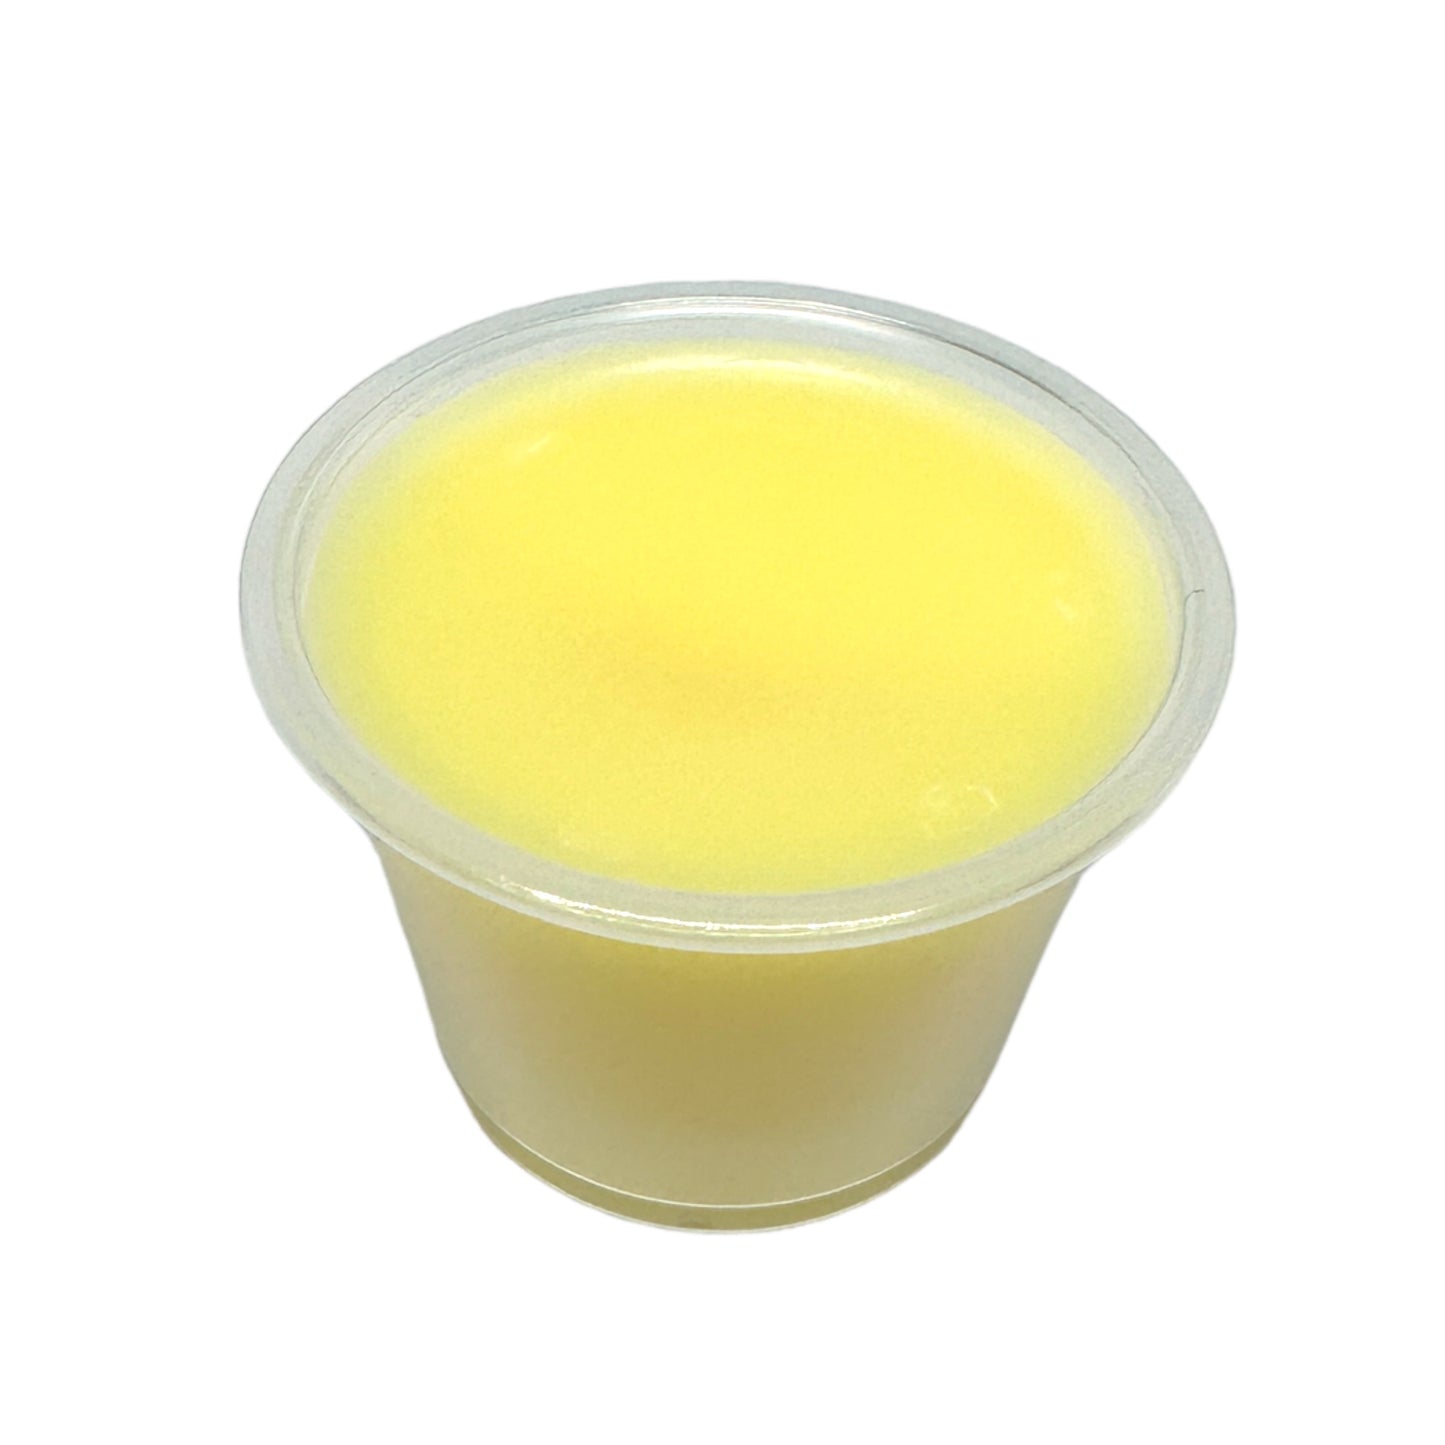 Lemon Curd wax melts